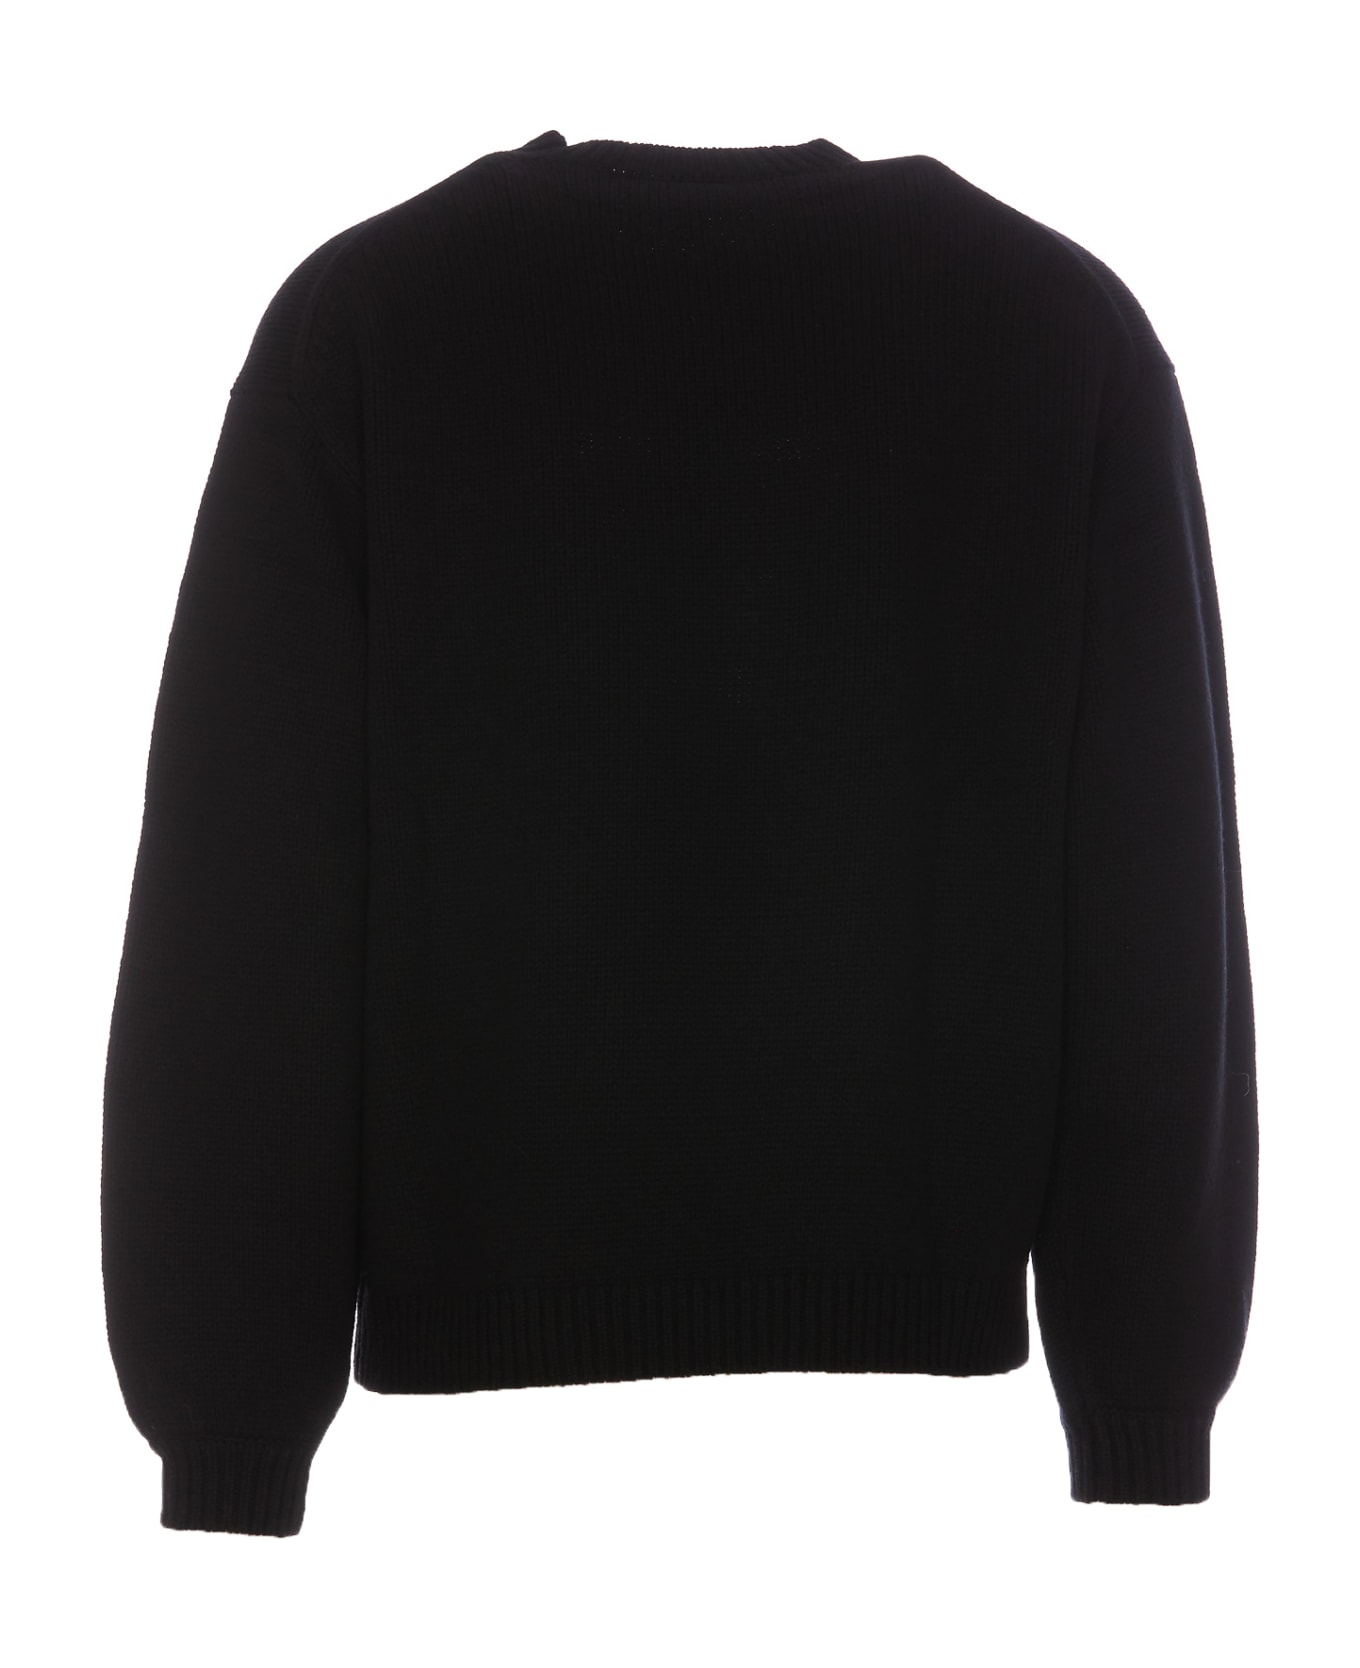 Kenzo Paris Sweater - BLACK